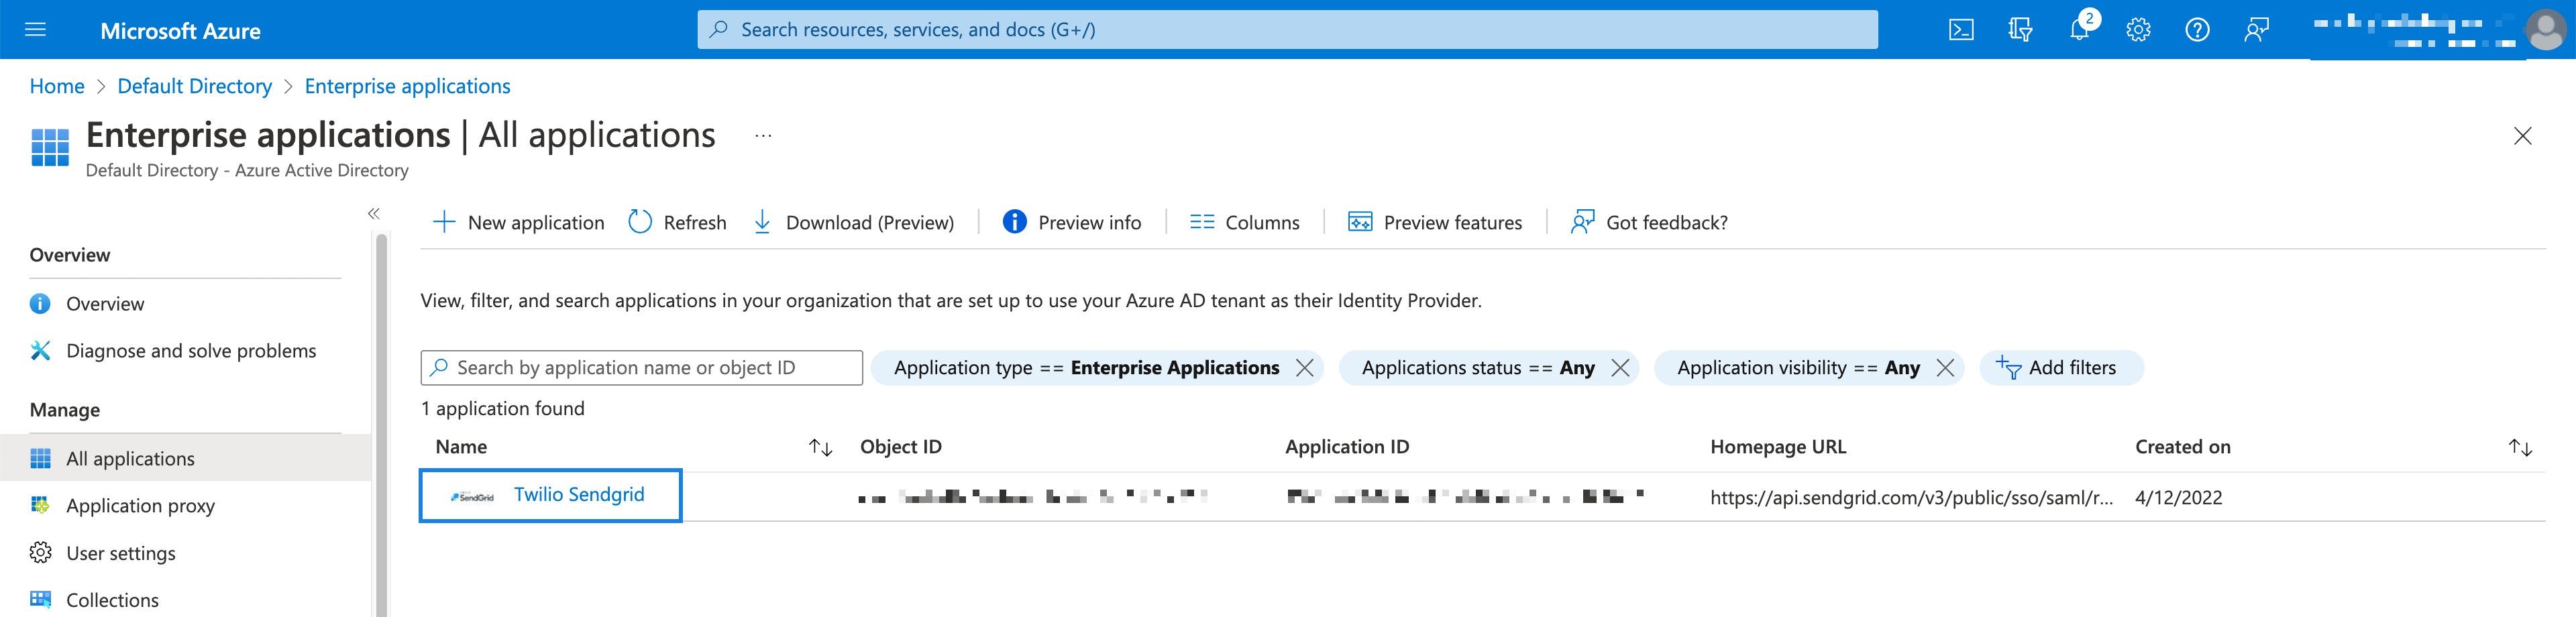 You Twilio SendGrid Azure AD app in a list of enterprise applications.